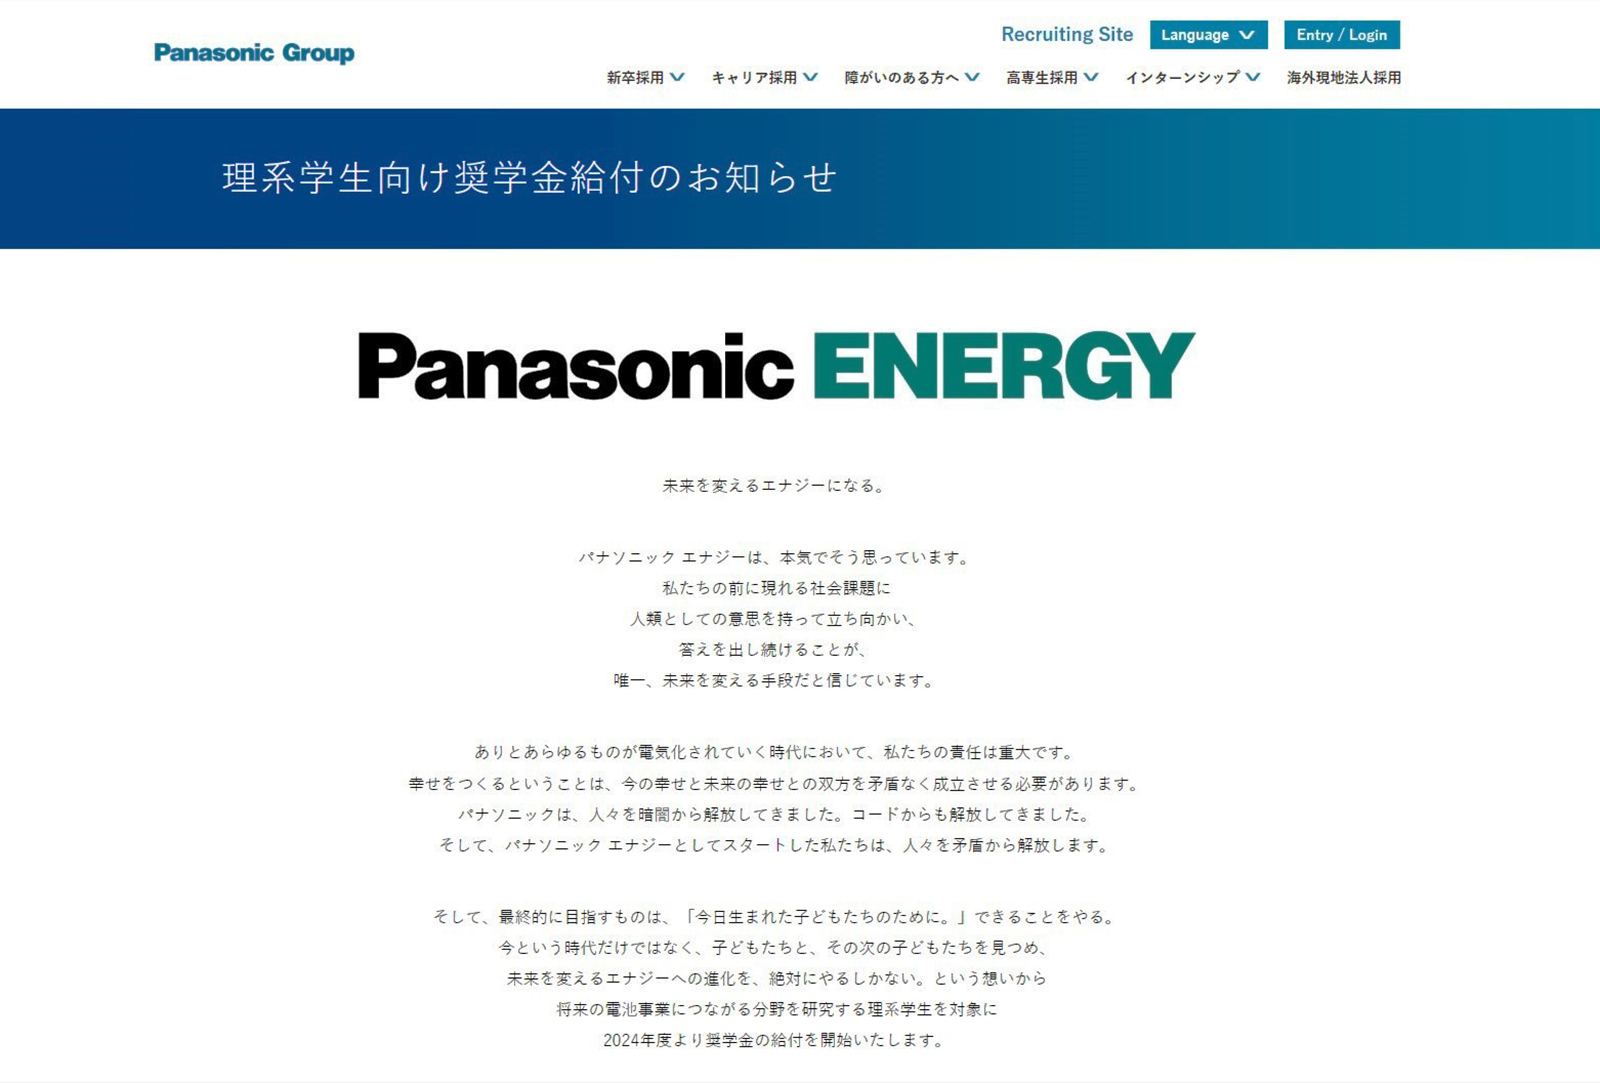 Panasonic ENERGY 理系学生向け奨学金給付のお知らせ